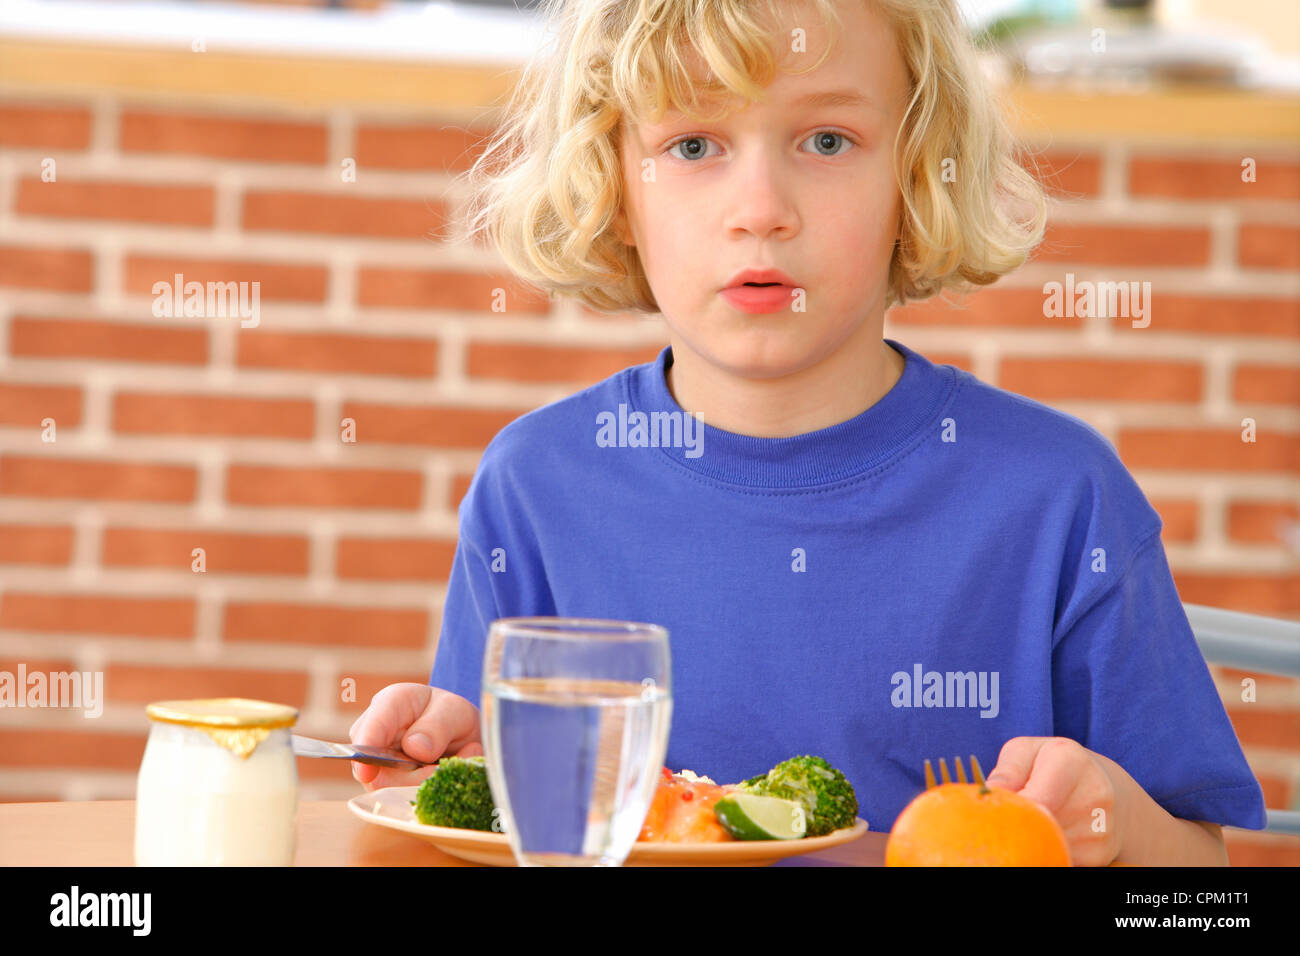 CHILD EATING FISH Stock Photo